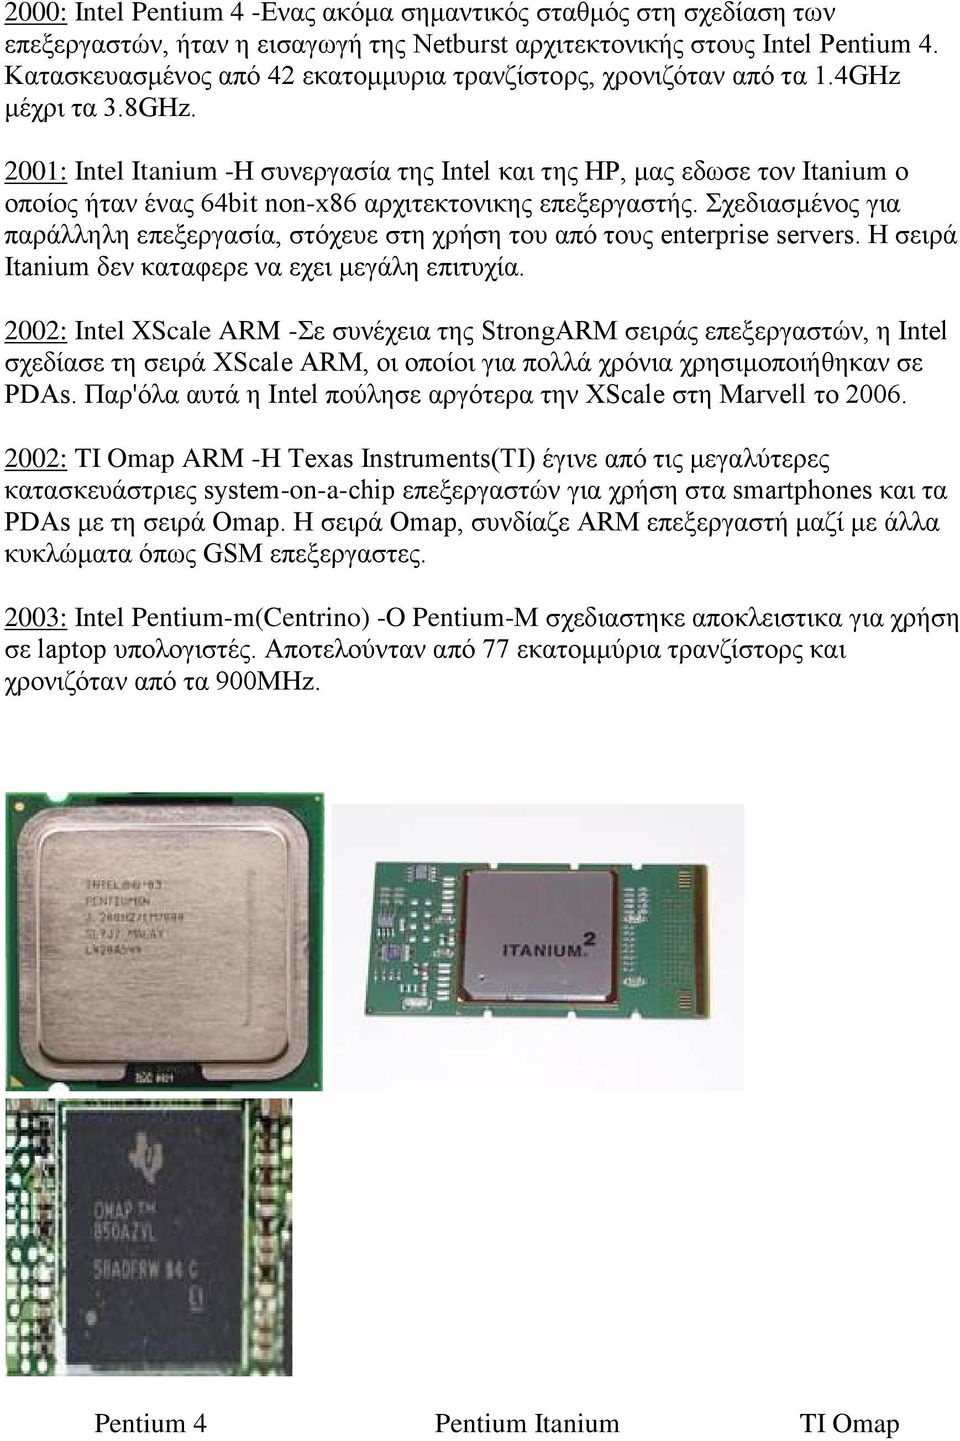 2001: Intel Itanium -Η συνεργασία της Intel και της ΗΡ, μας εδωσε τον Itanium ο οποίος ήταν ένας 64bit non-x86 αρχιτεκτονικης επεξεργαστής.